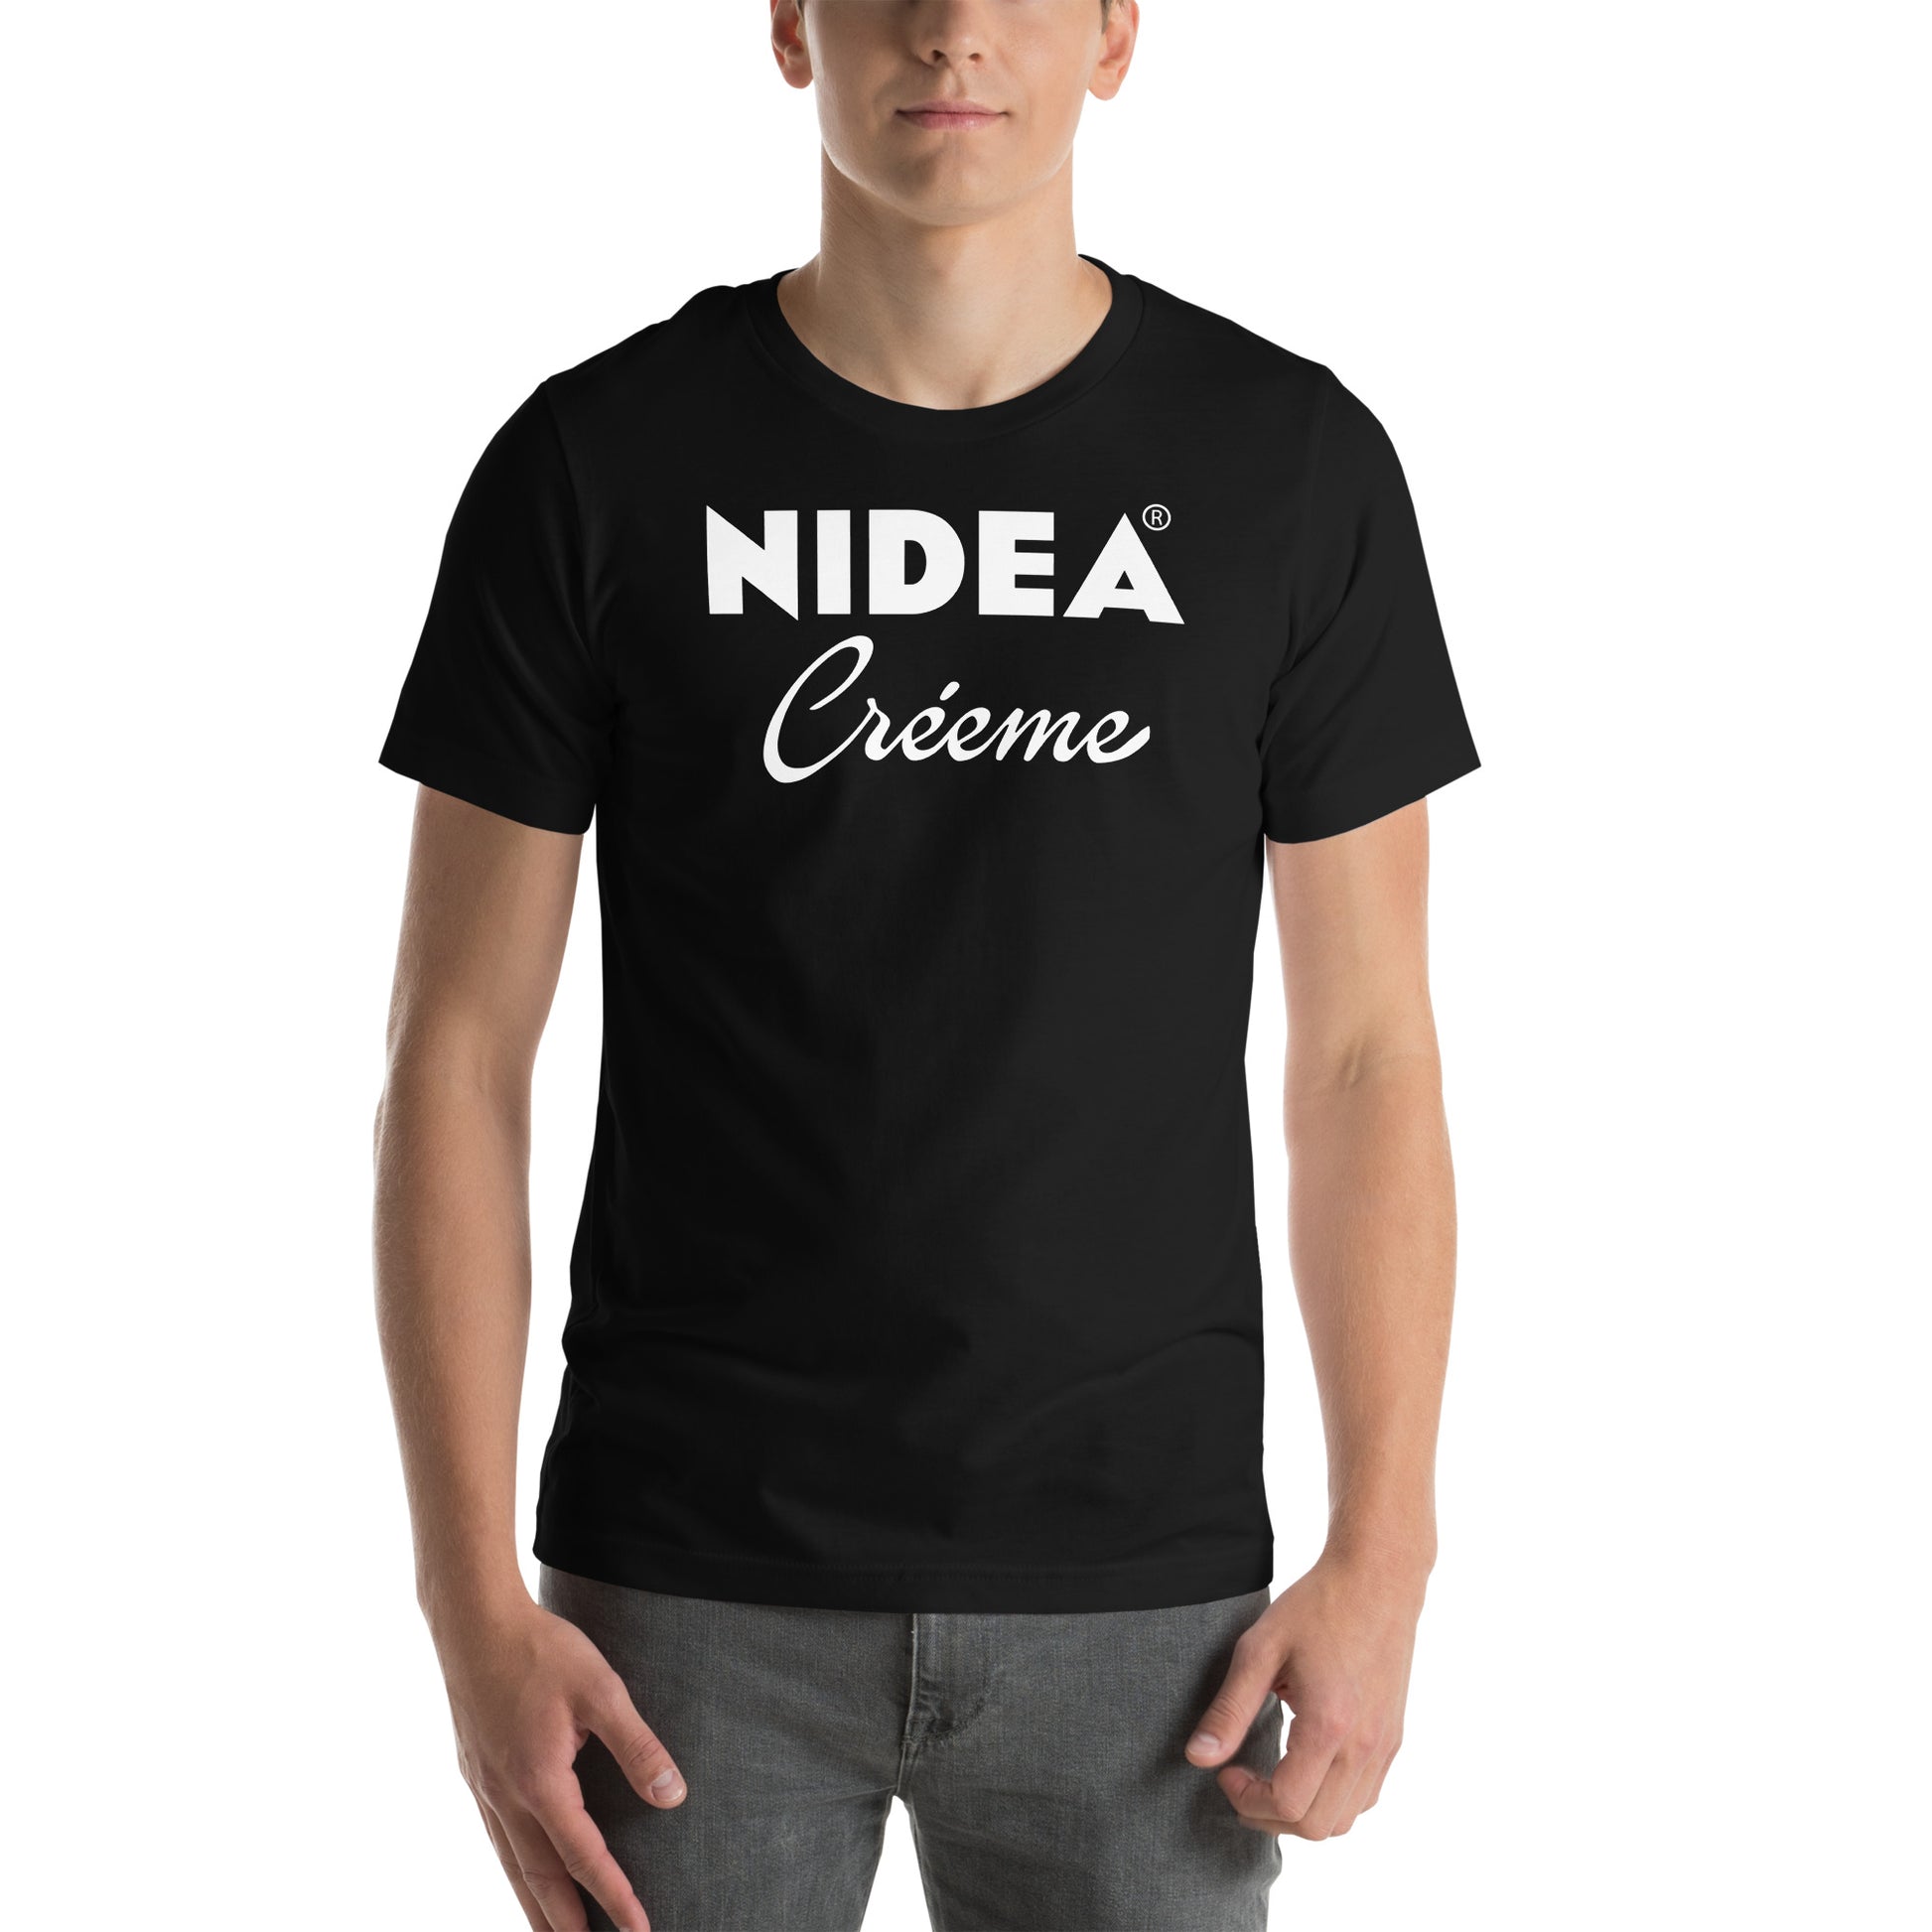 Camiseta Nidea Créeme logo Nivea. Color Negro